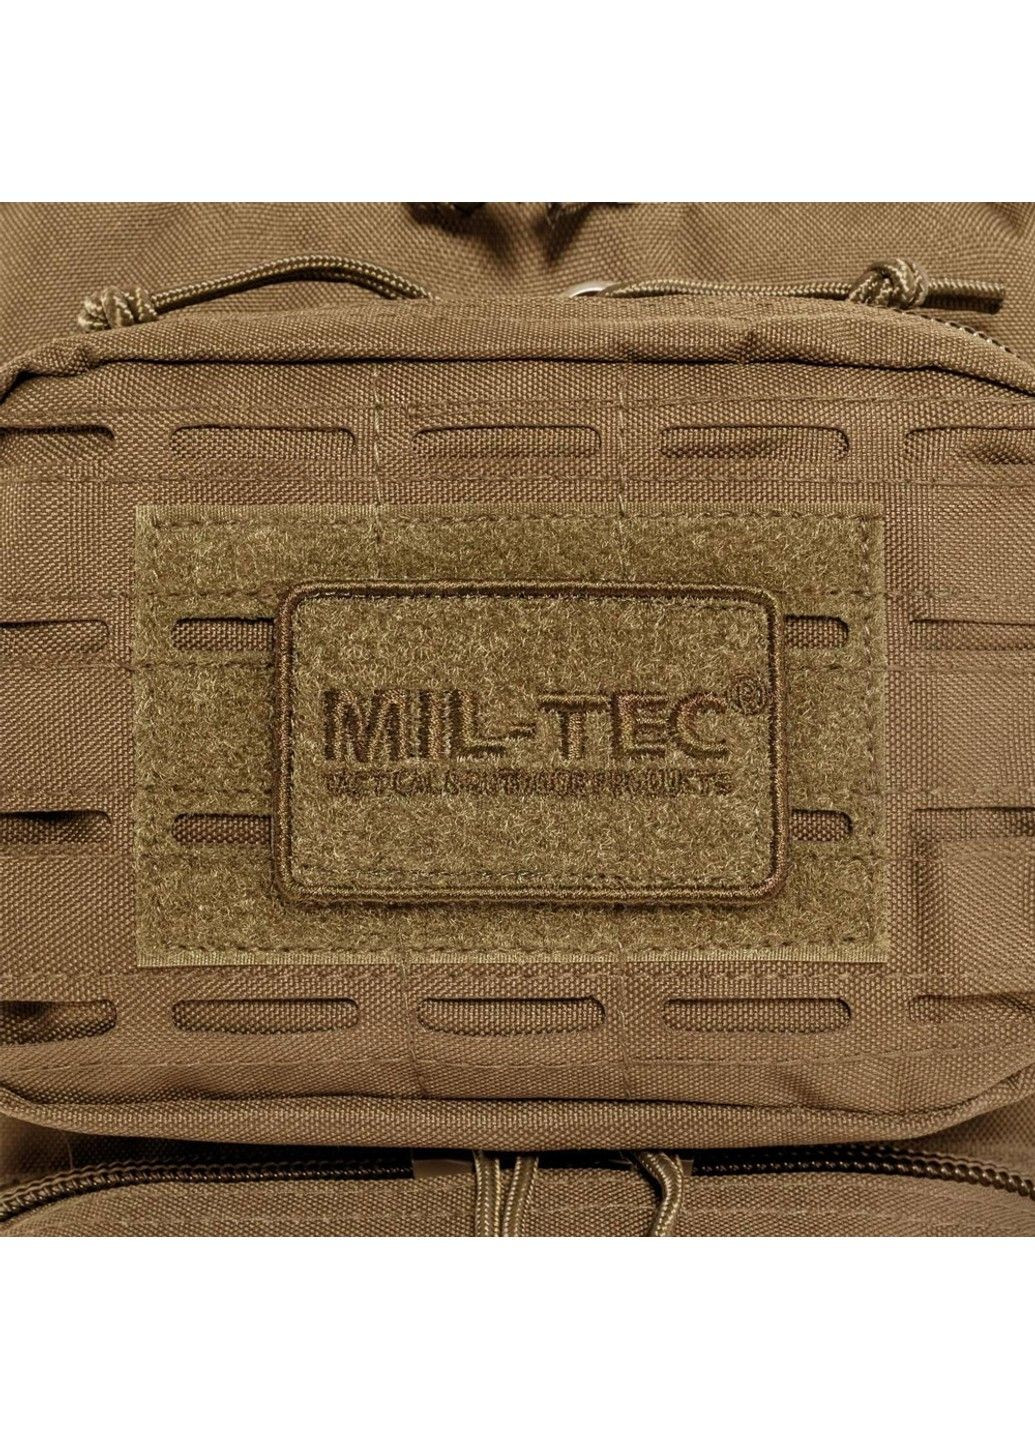 Рюкзак 36л "Assault Pack" із кріпленням Molle Pals Laser Cut розмір 51х29х28 см Mil-Tec (293269490)